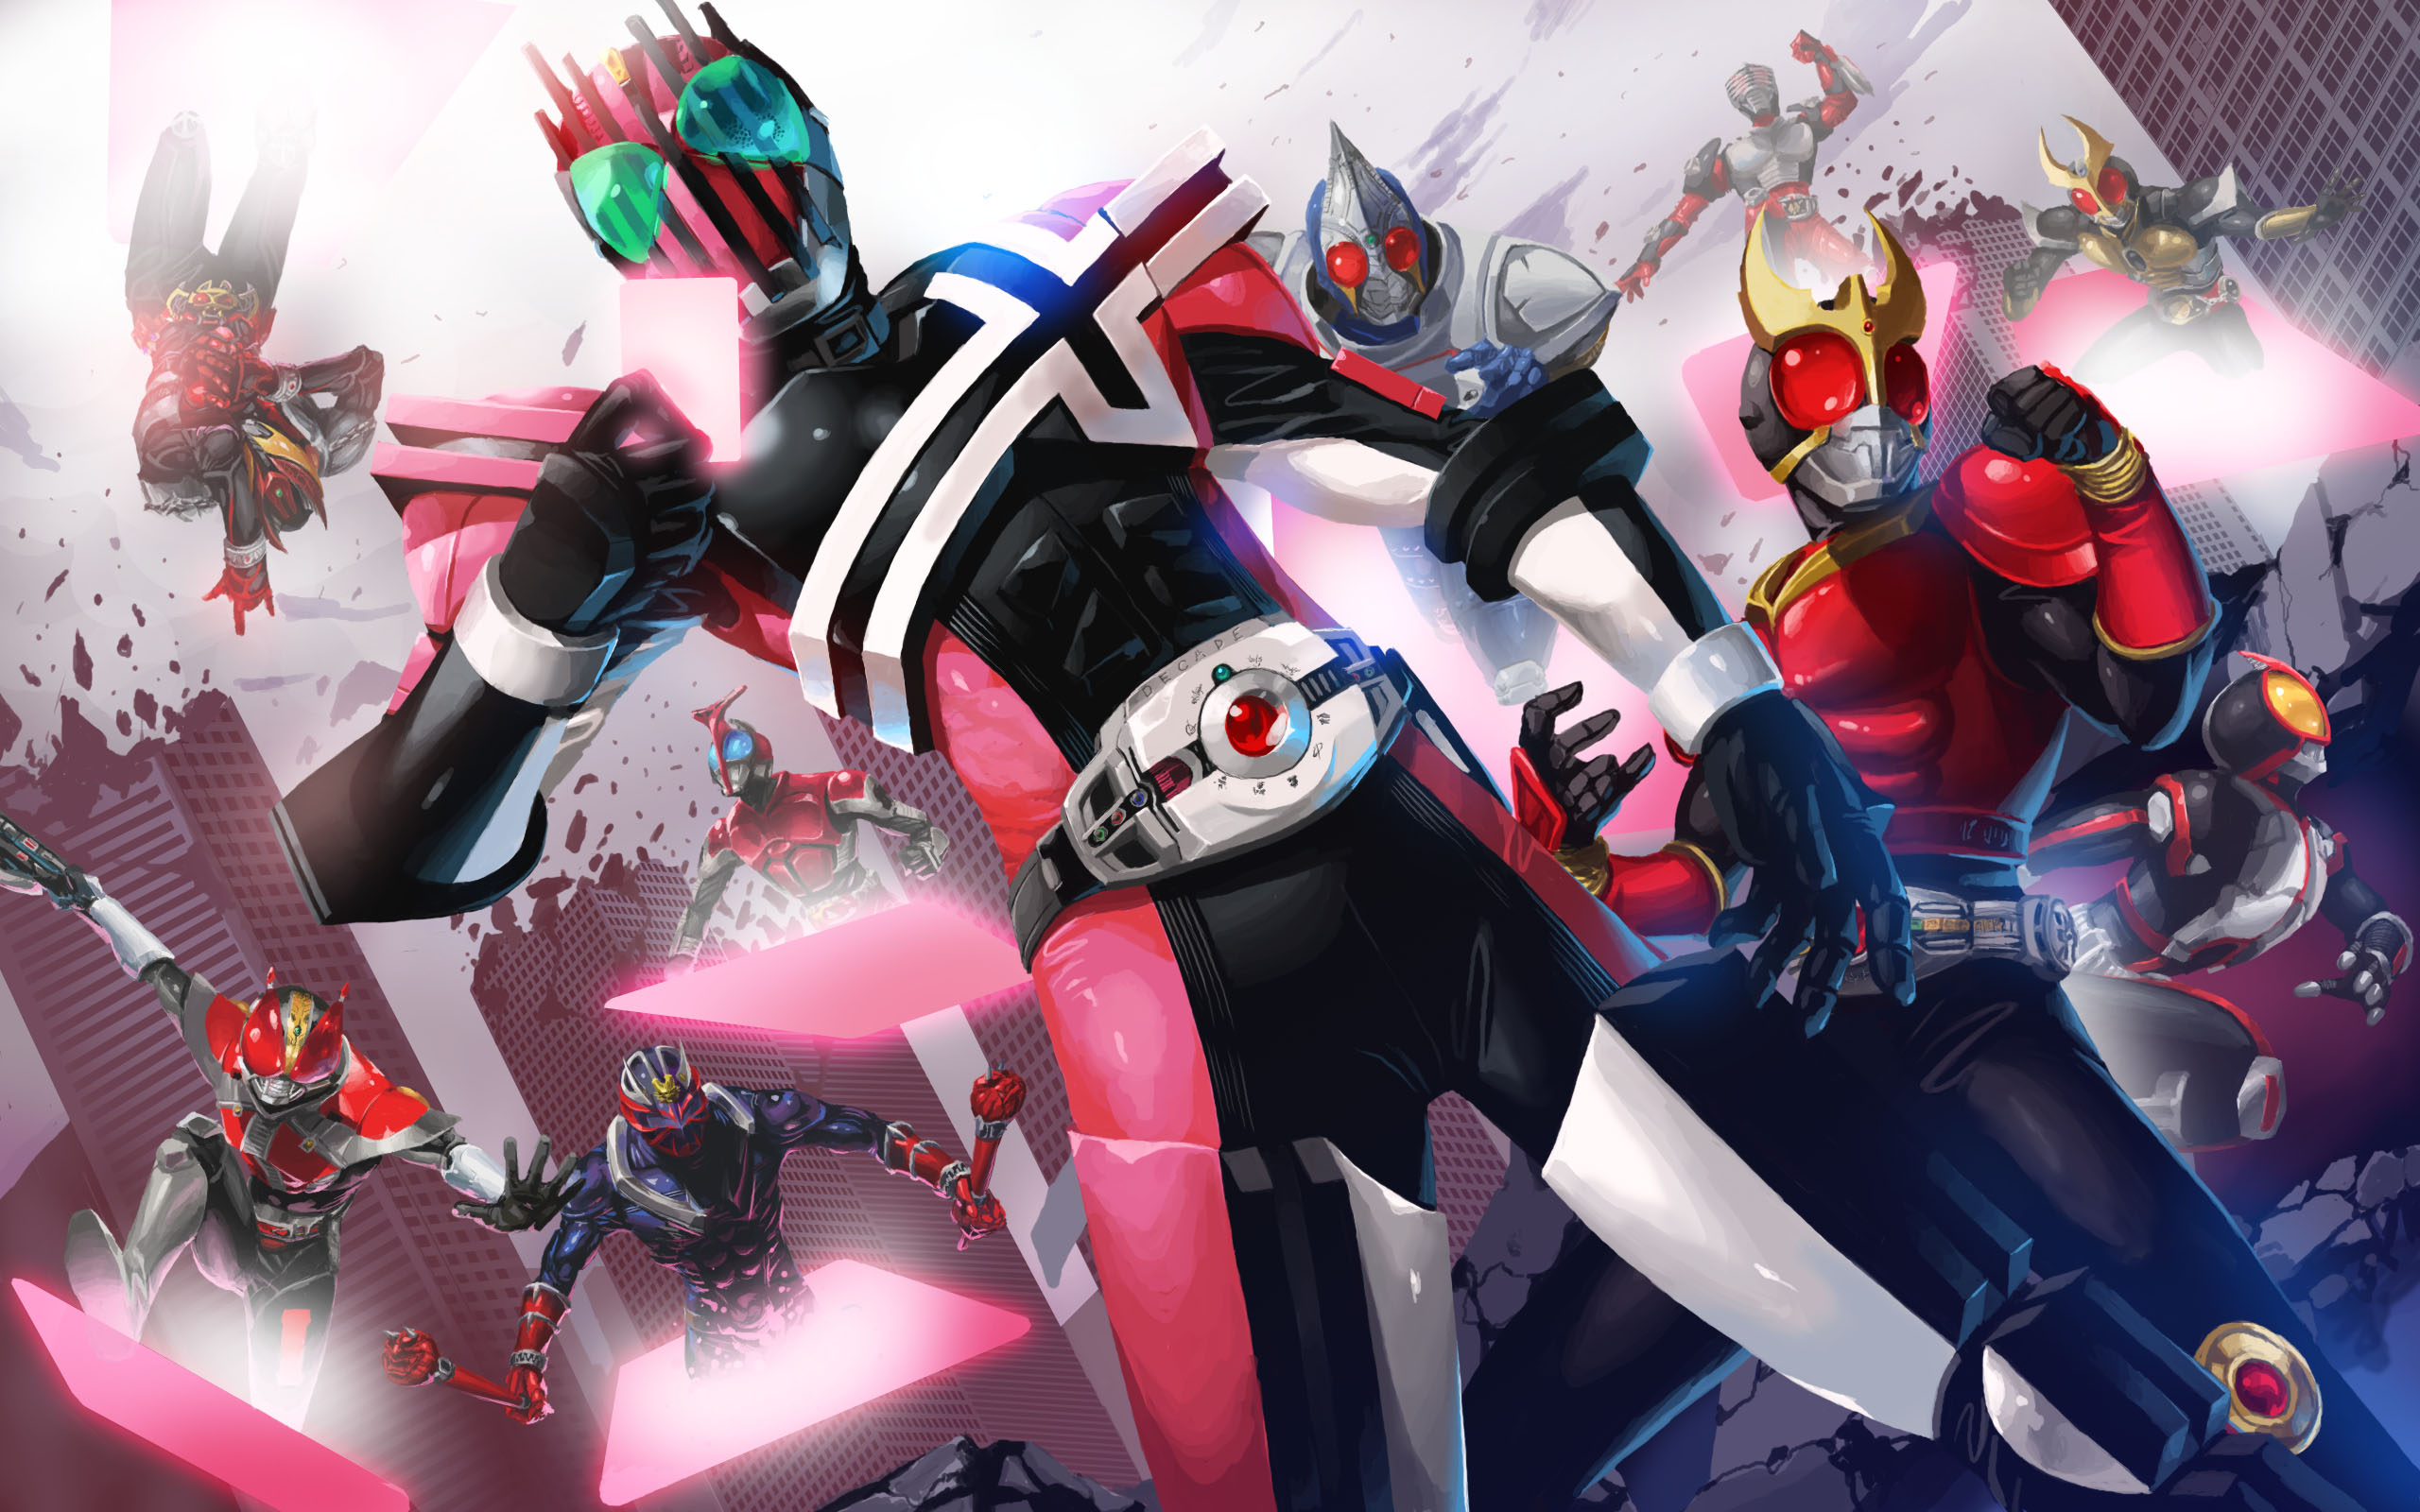 Kamen Rider Backgrounds on Wallpapers Vista